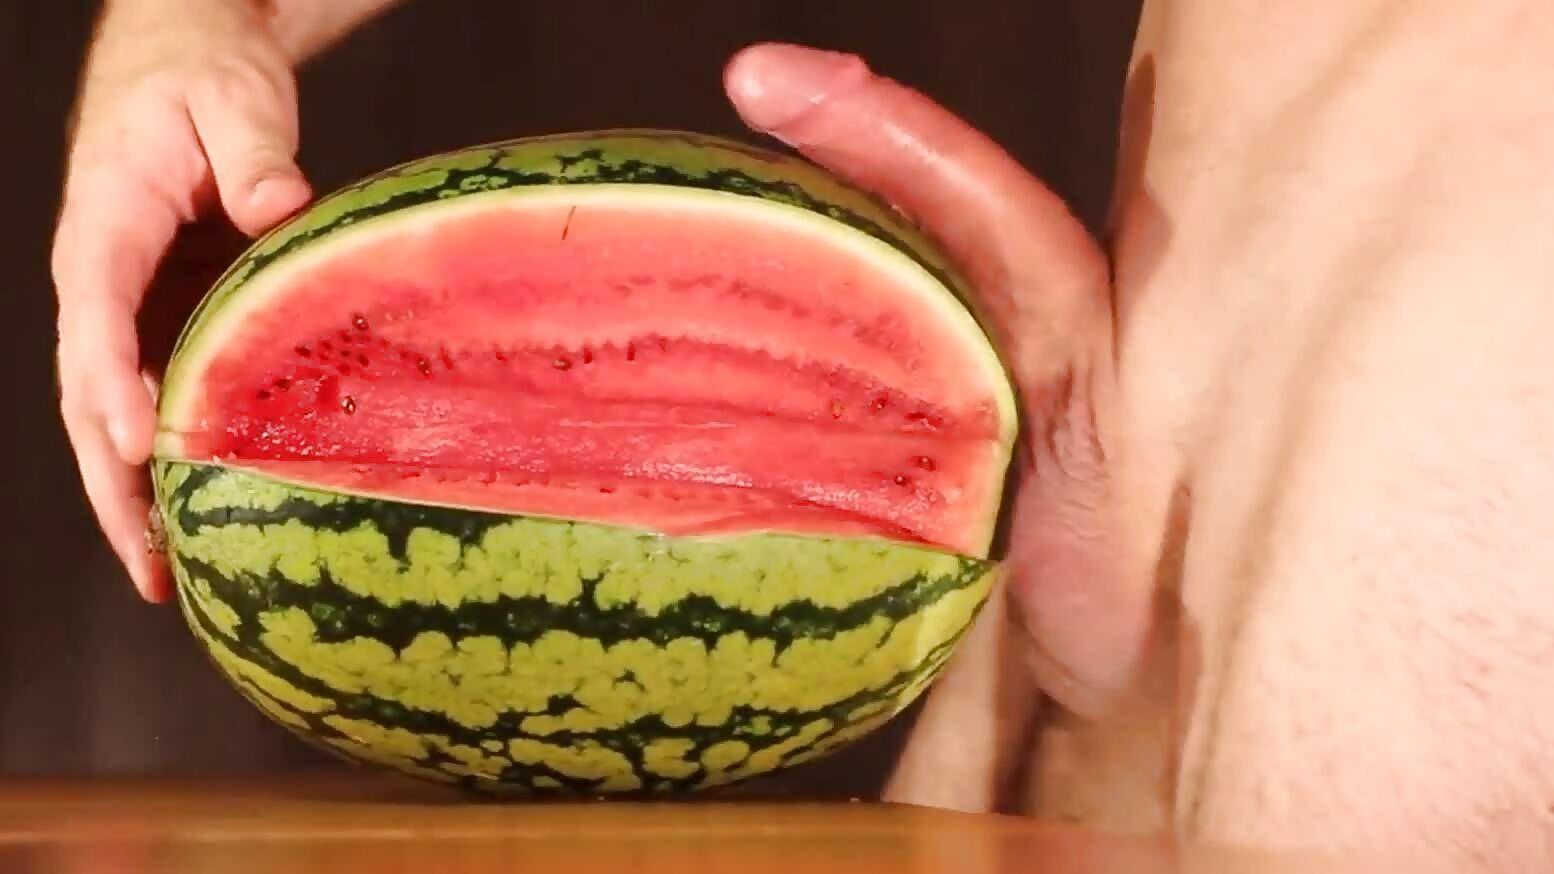 Guy Fucks A Watermelon